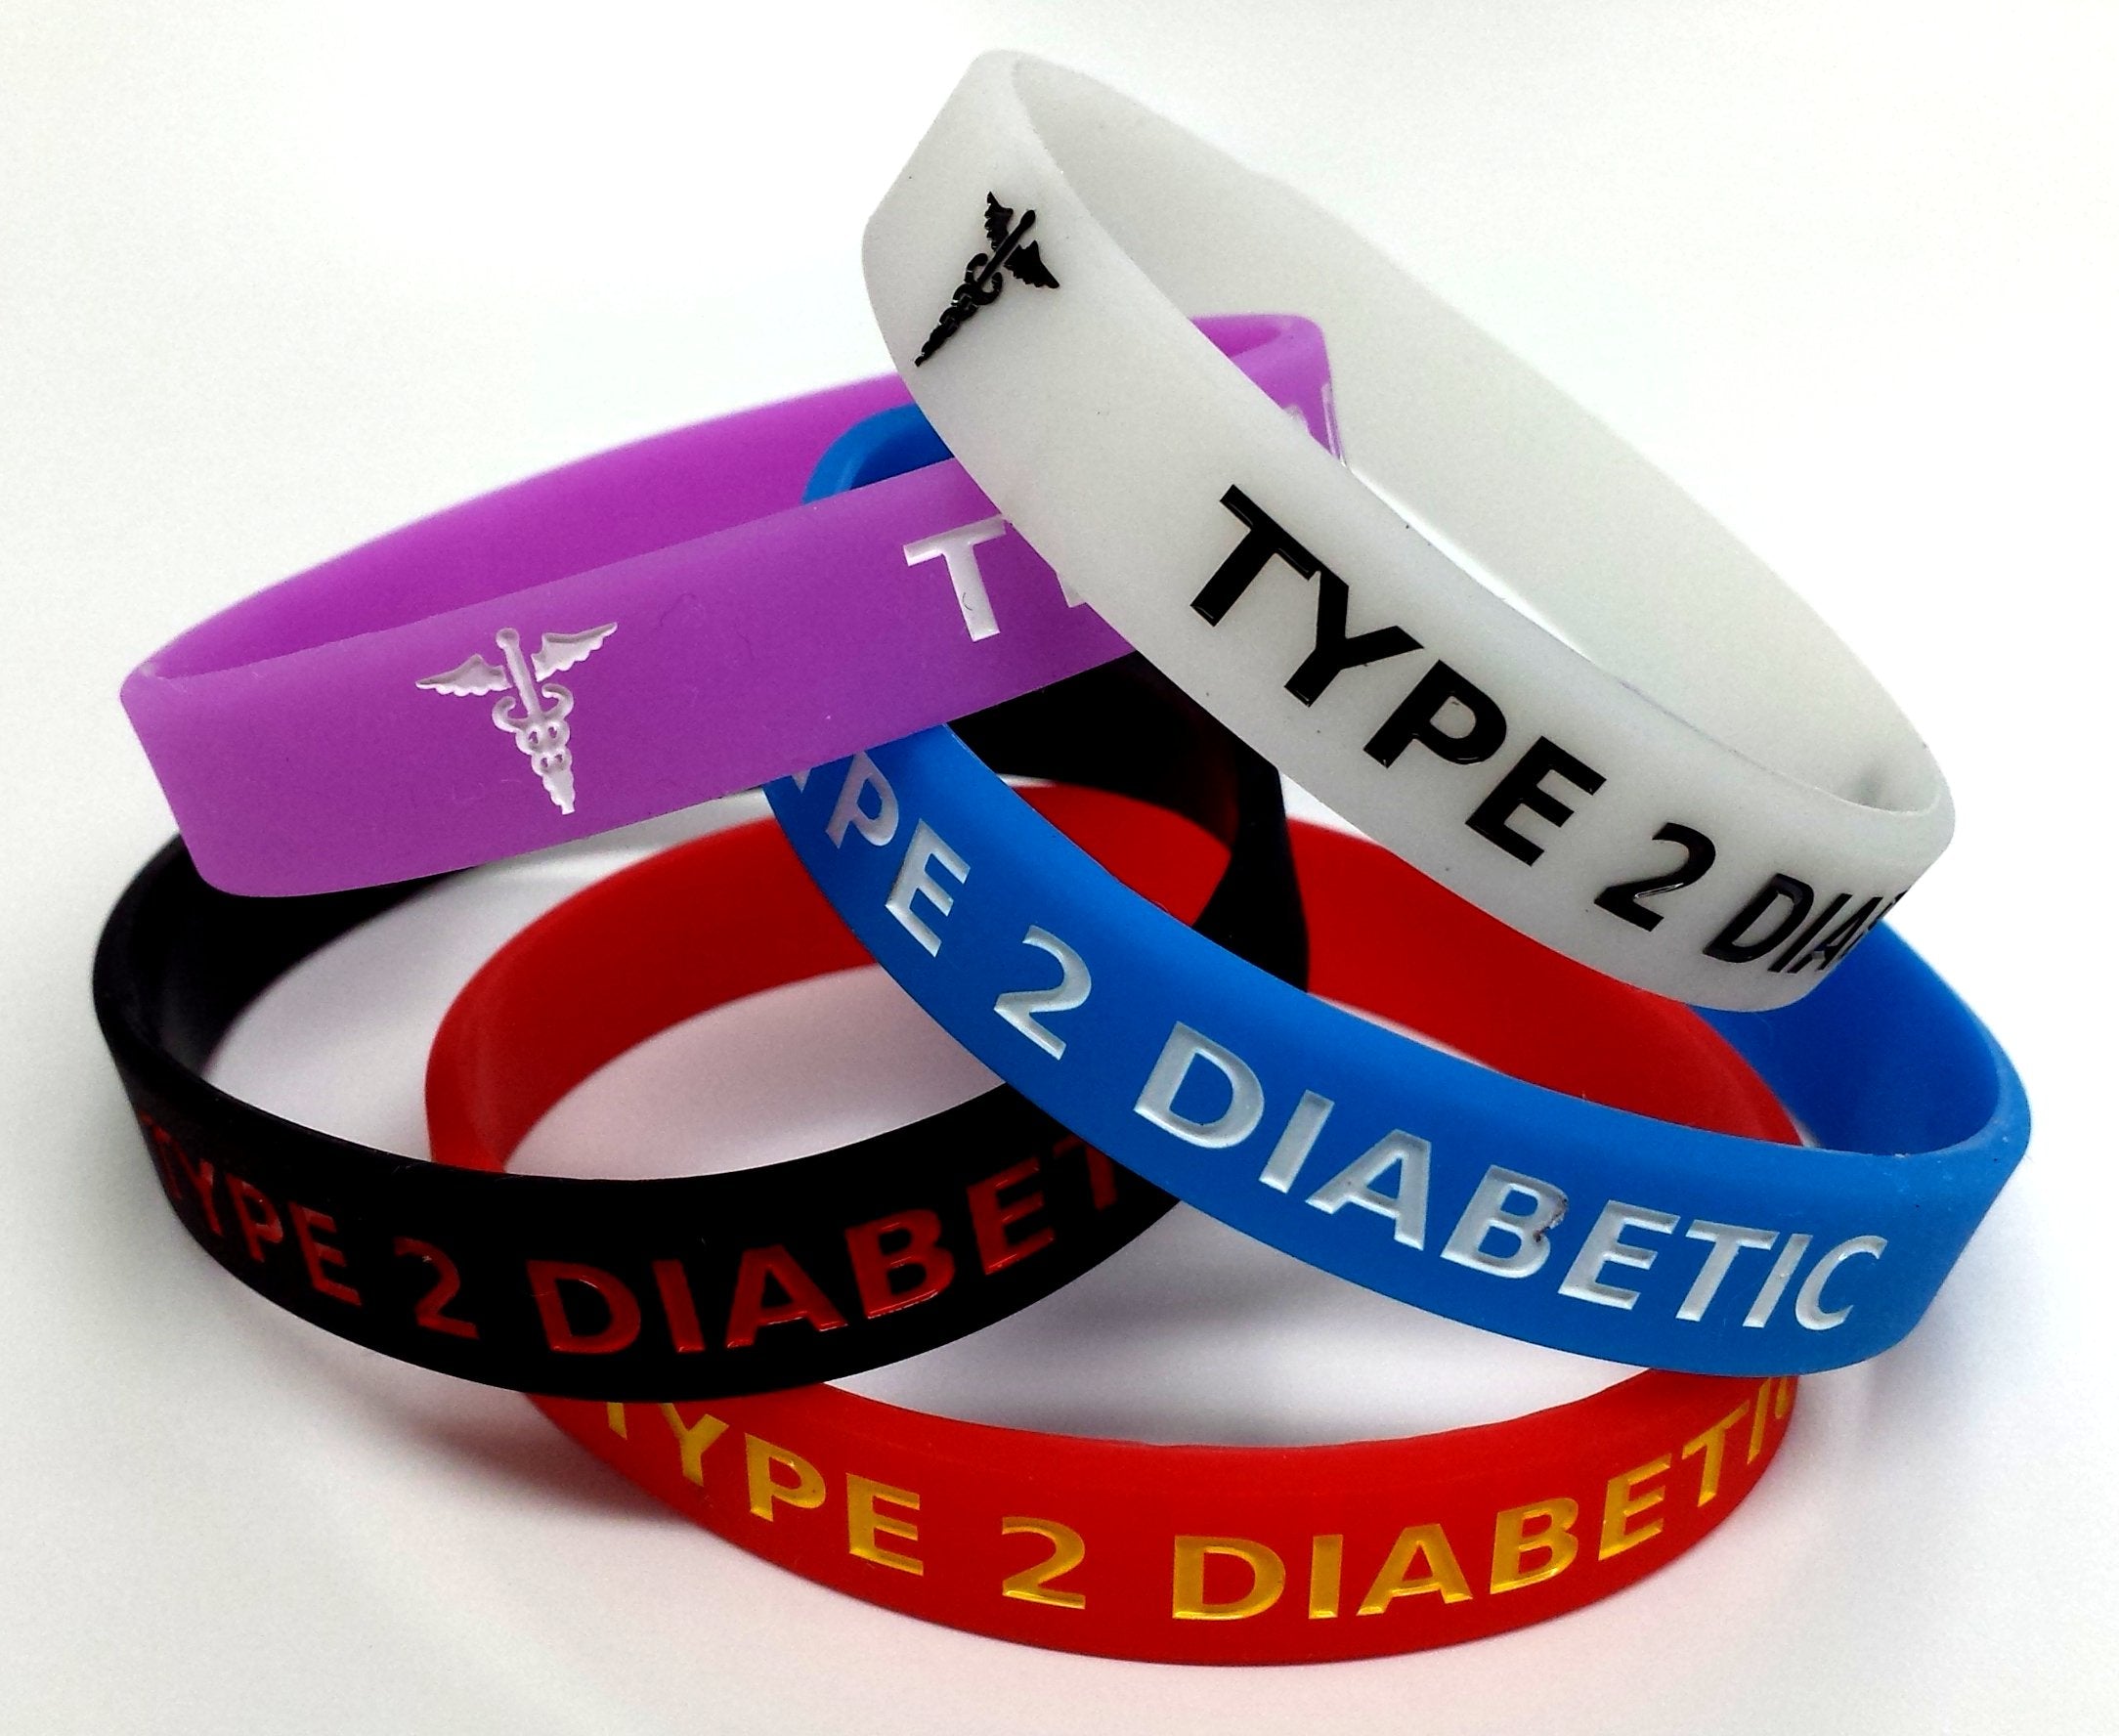 5x TYPE 2 DIABETIC diabetes Wristband MEDICAL AWARENESS ALERT BRACELET Glow in the Dark Red Black Purple Blue